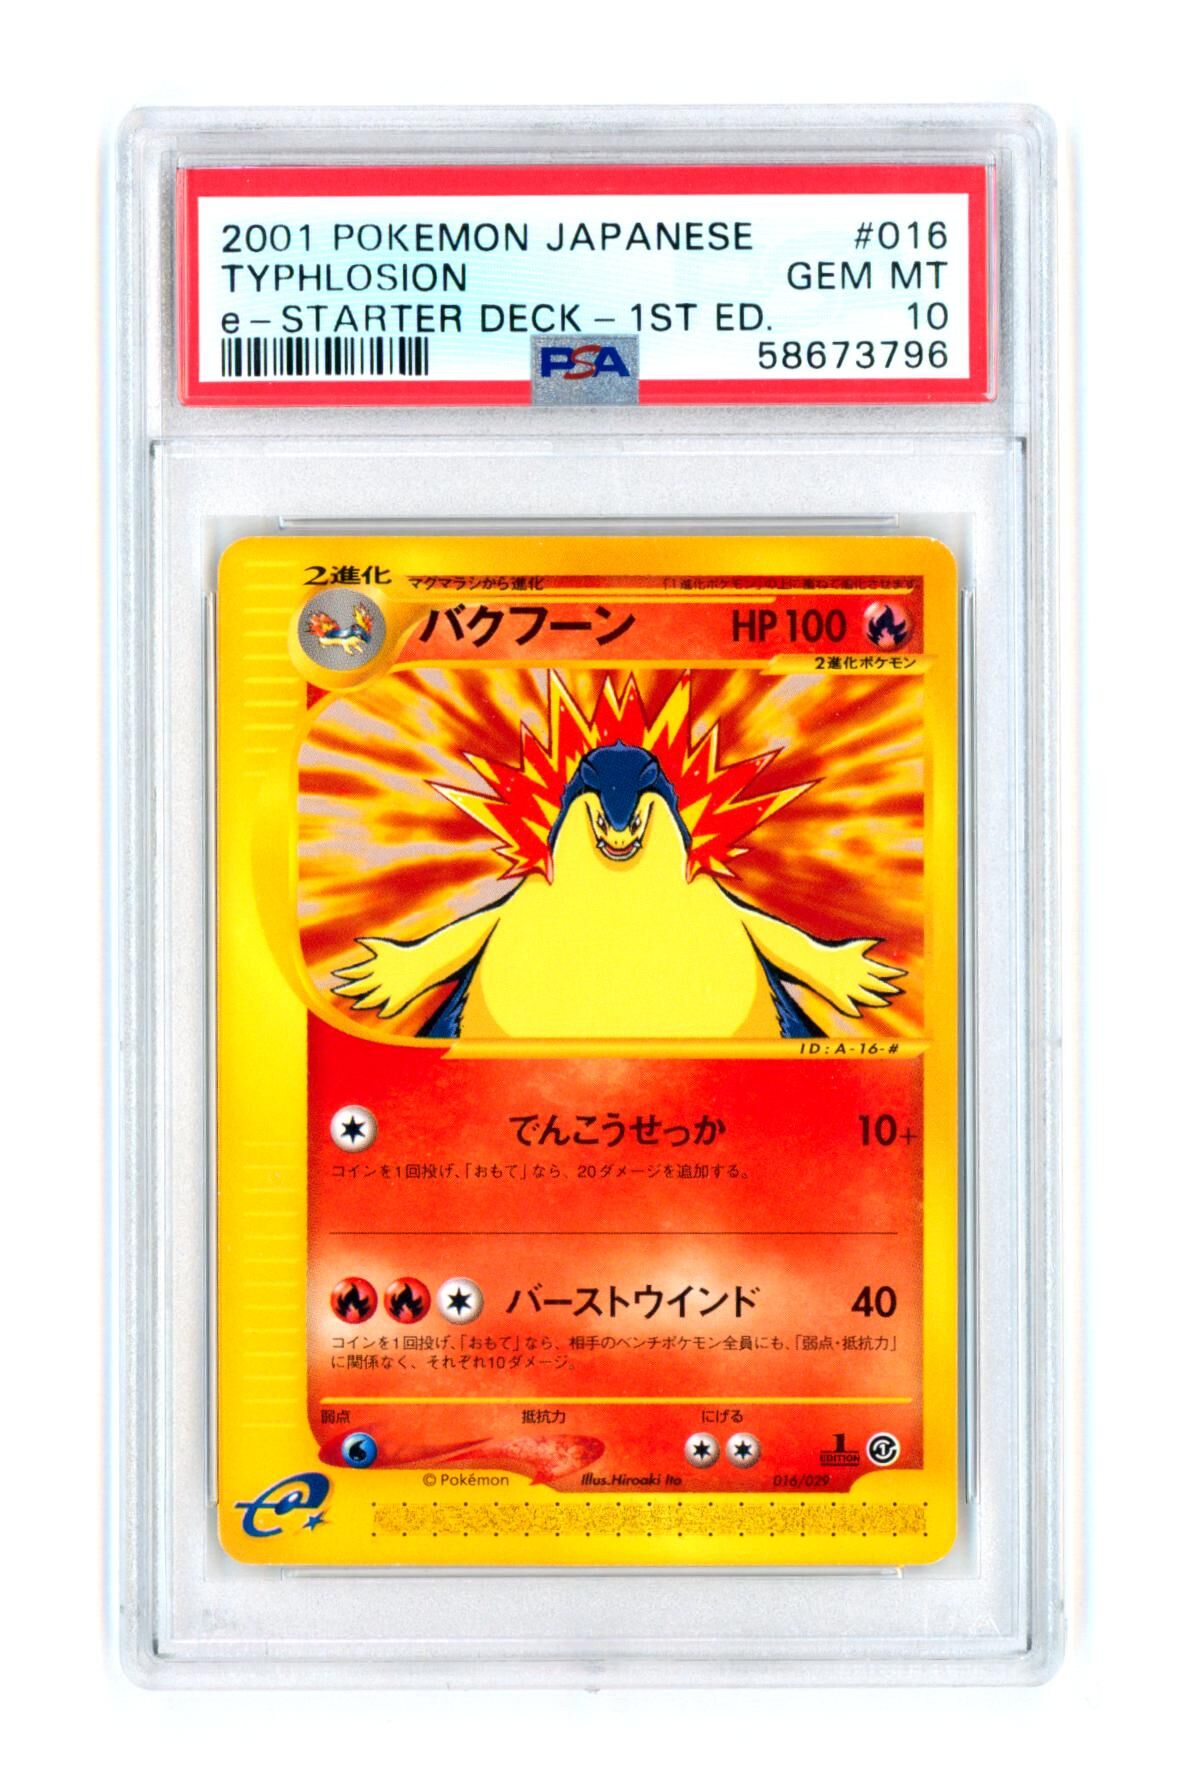 Typhlosion 016/029 - e-Starter Deck 1ST ED. - Japanese - PSA 10 GEM MT - Pokémon